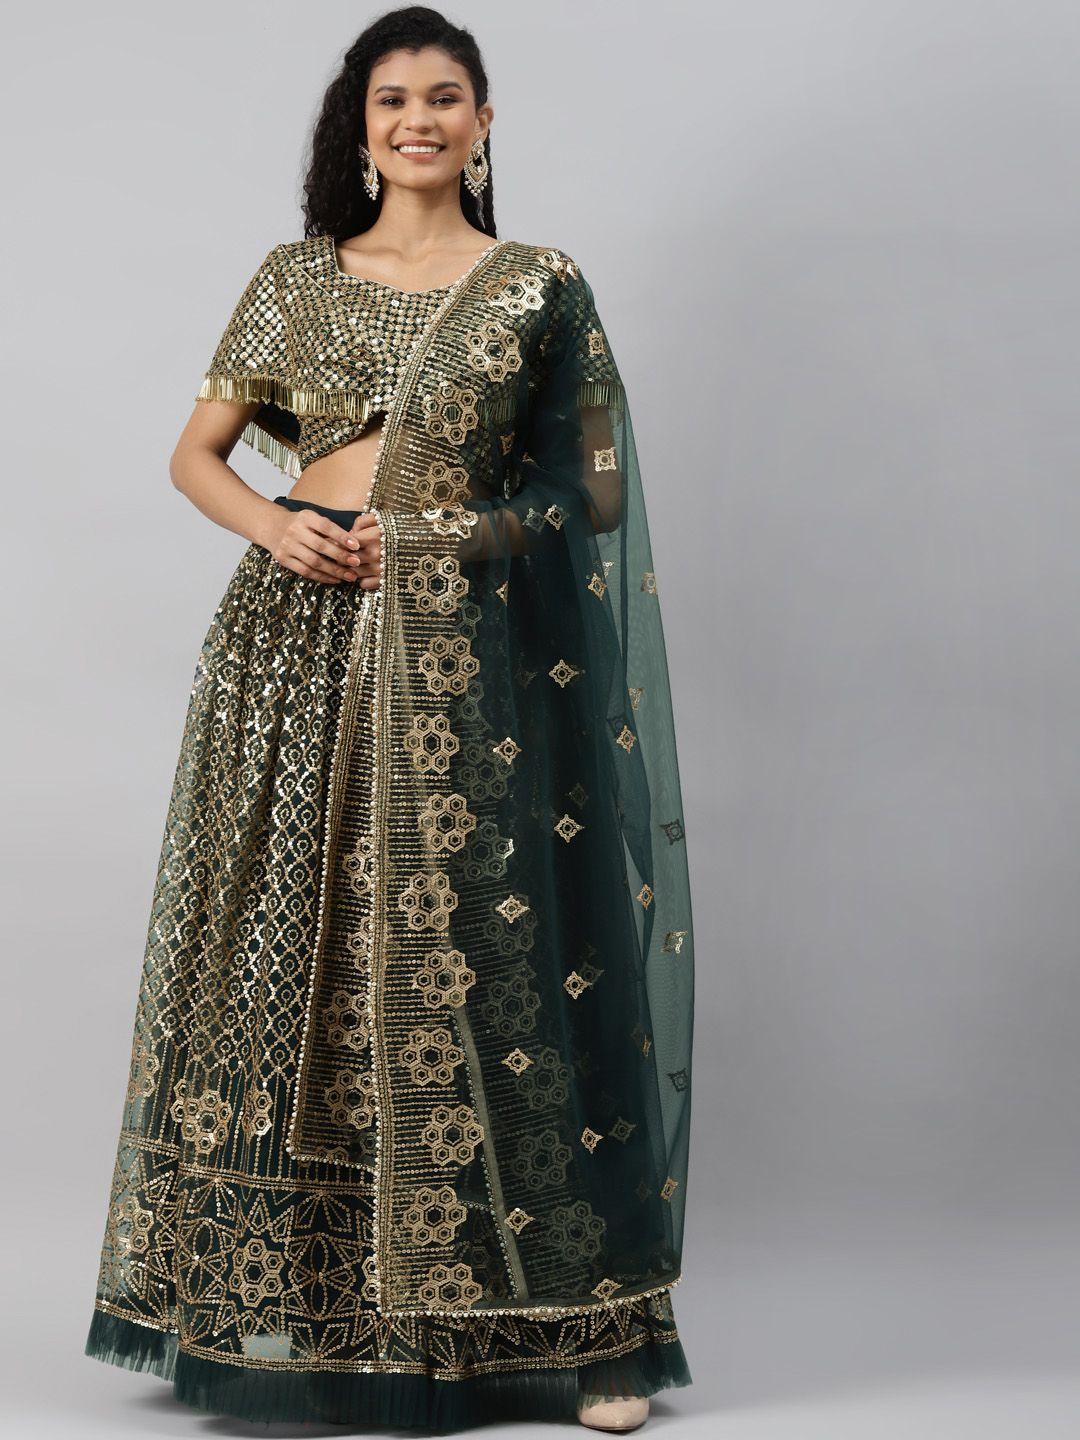 readiprint fashions green & gold-toned embellished semi-stitched lehenga & unstitched blouse with dupatta